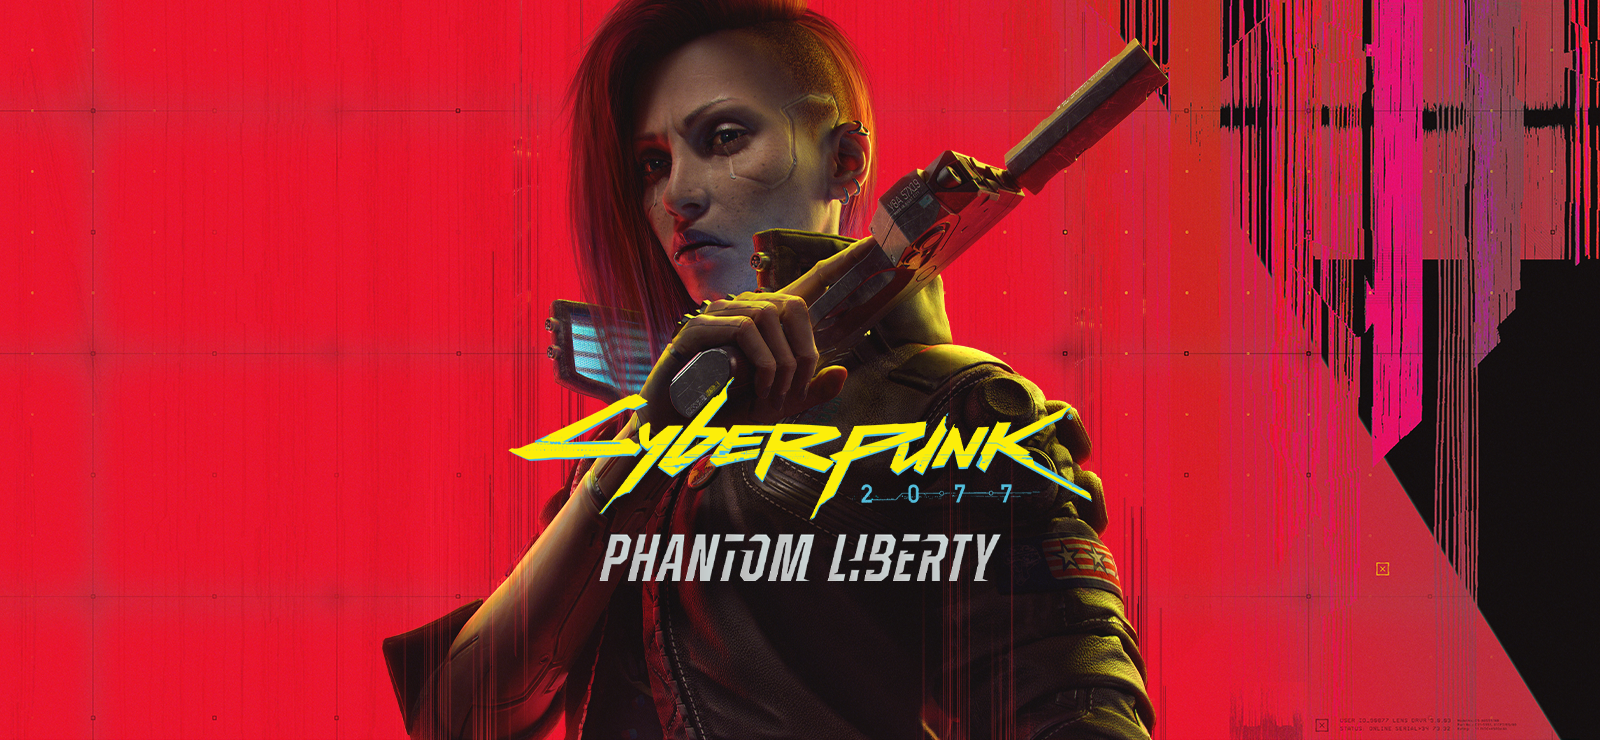 BESTSELLER - Cyberpunk 2077: Phantom Liberty